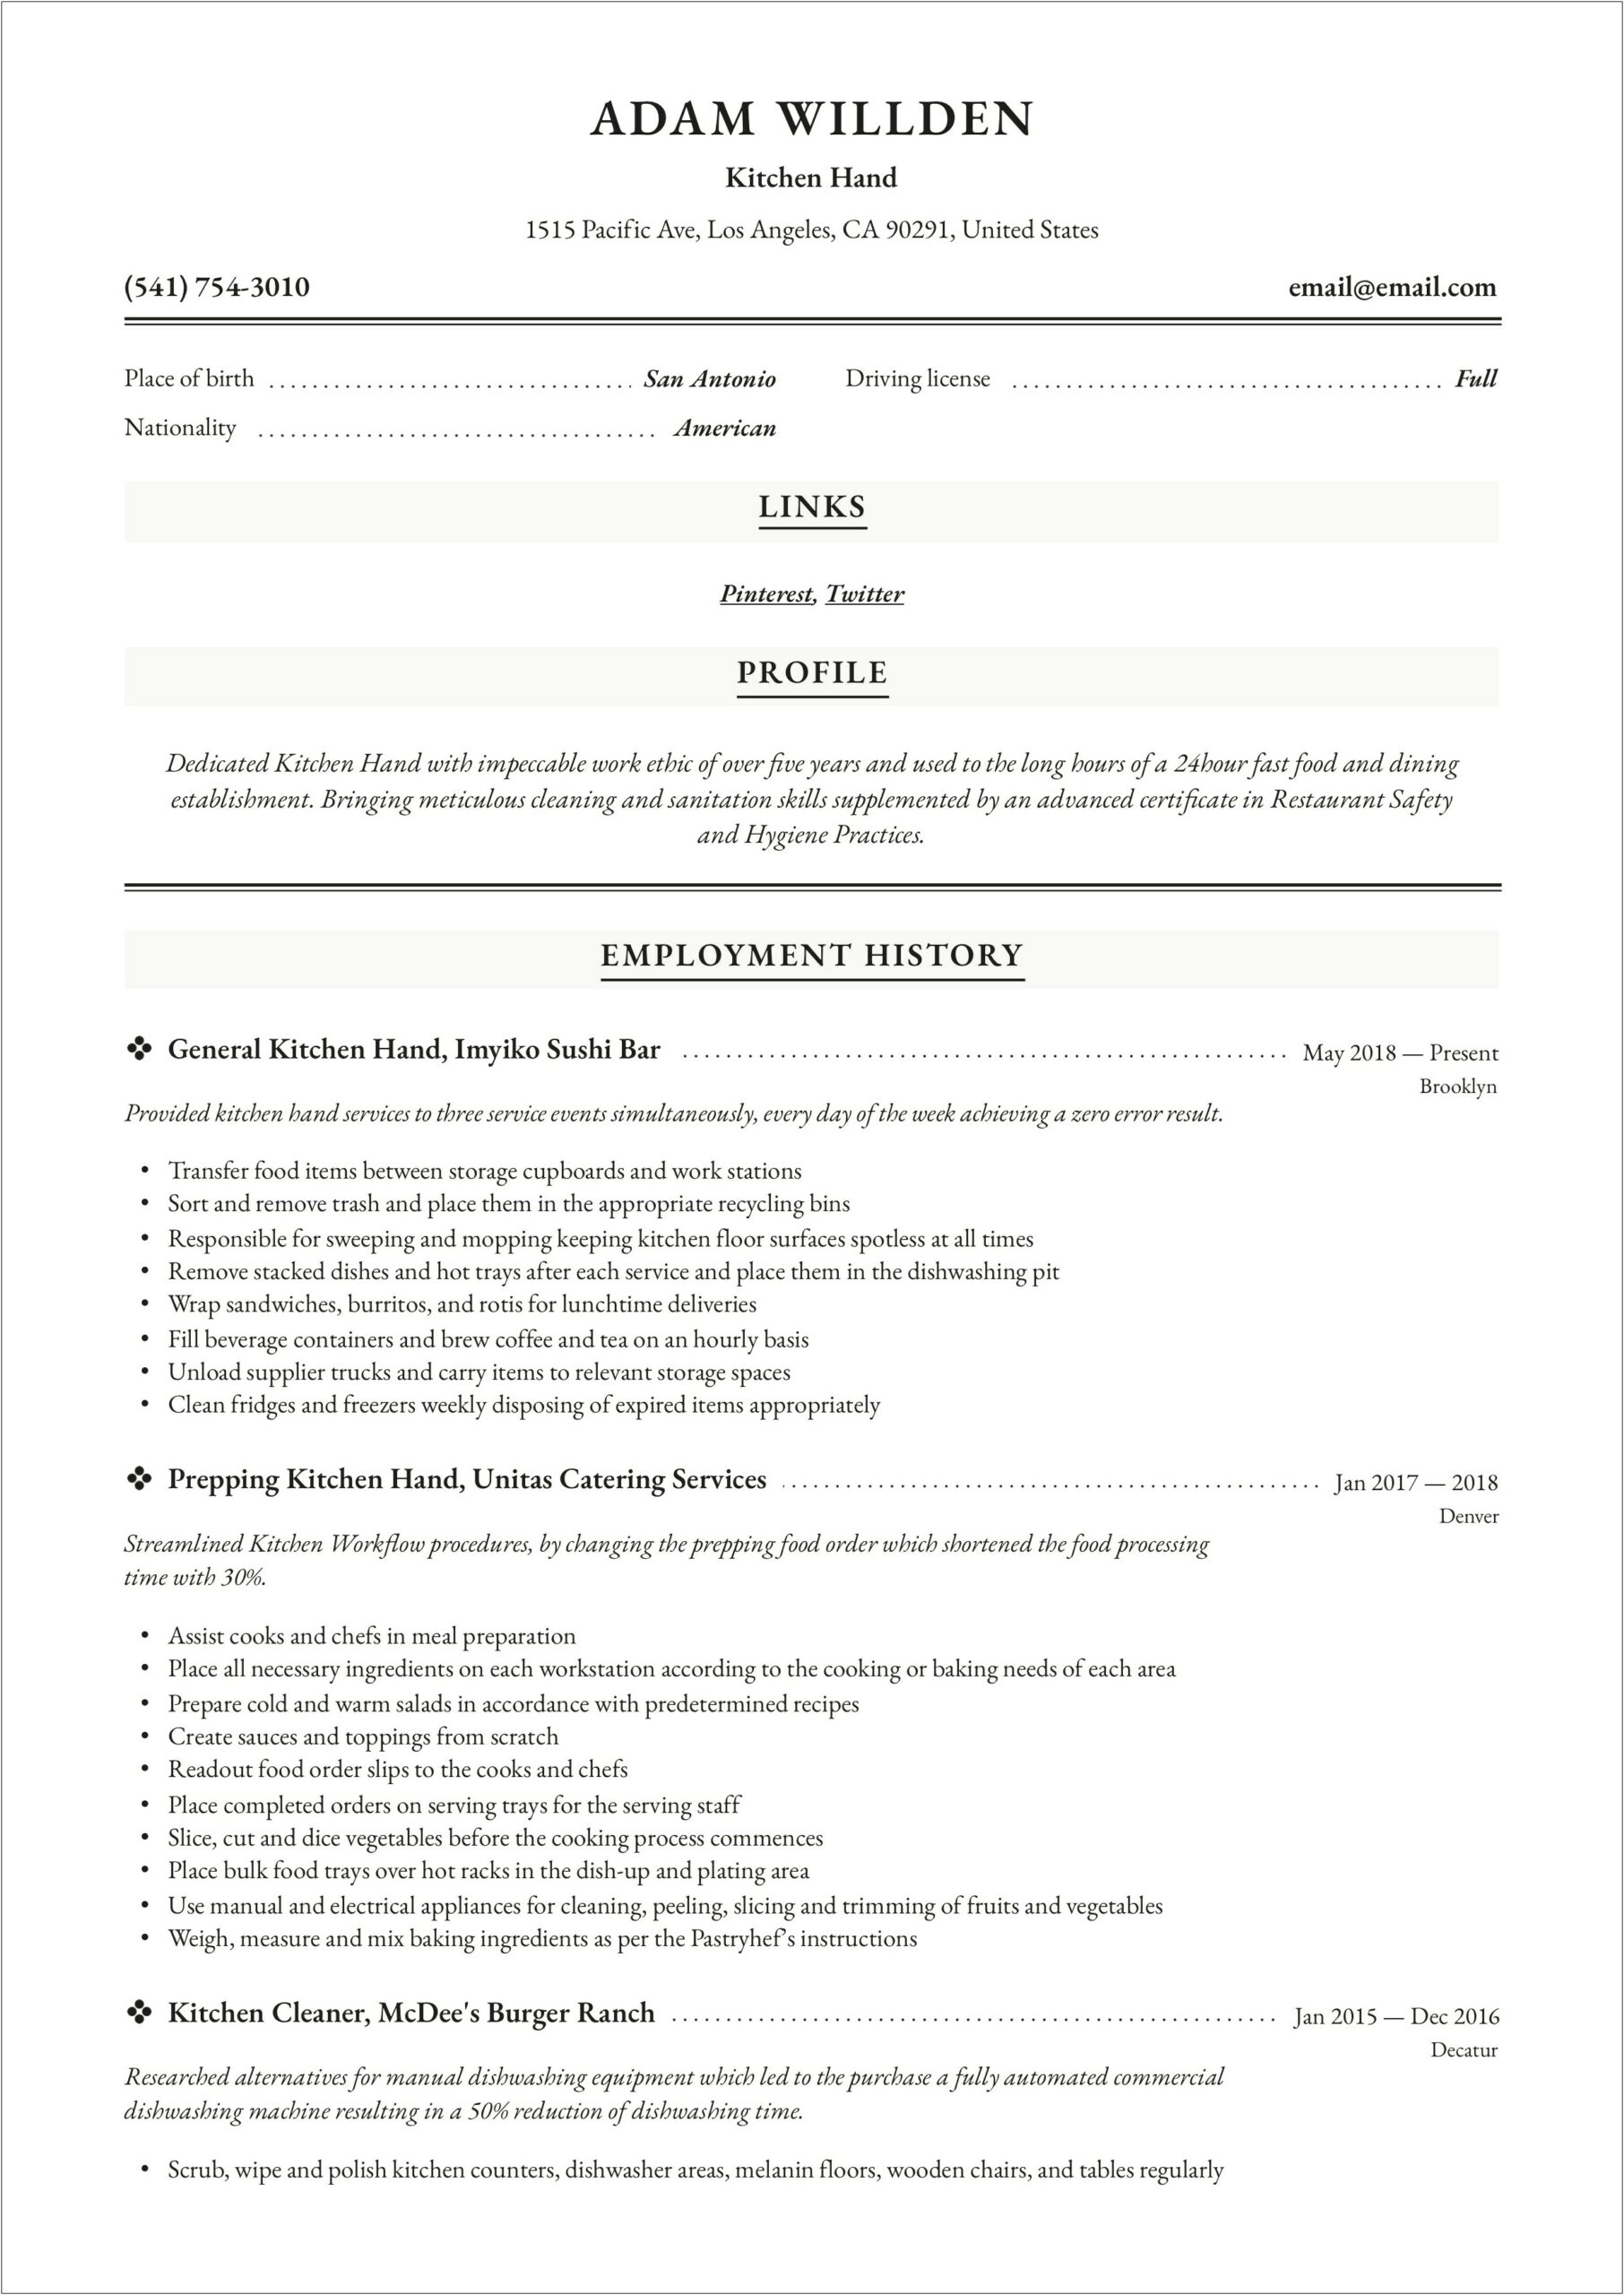 Kitchen Cleaner Job Description Resume